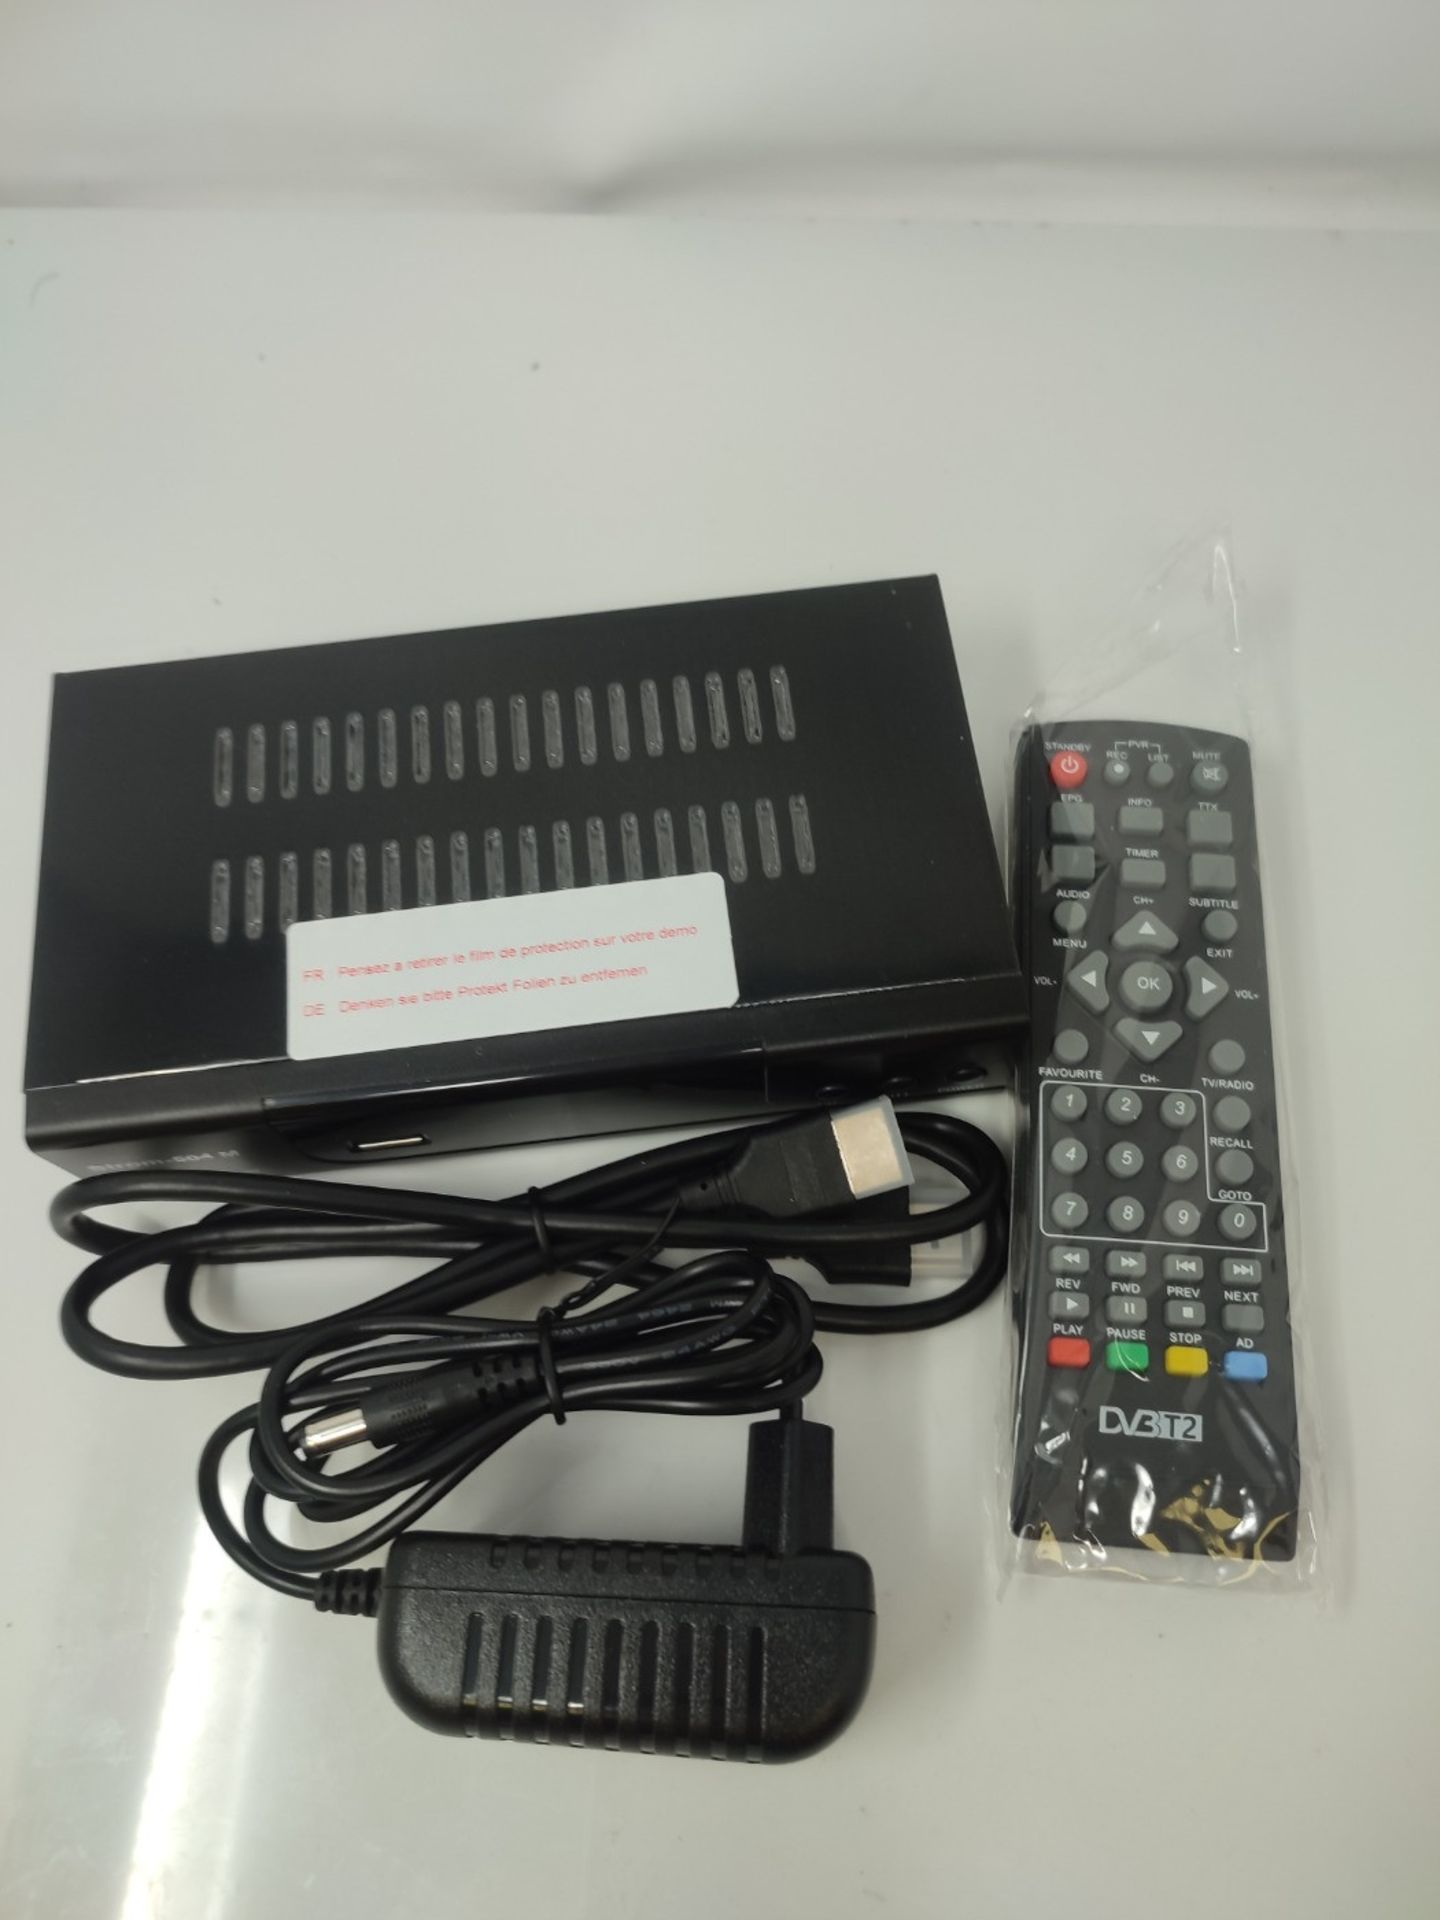 STROM 504 - Decoder TNT Full HD DVB-T2, compatibile con HEVC264 (HDMI, Scart, USB, Dig - Bild 3 aus 3